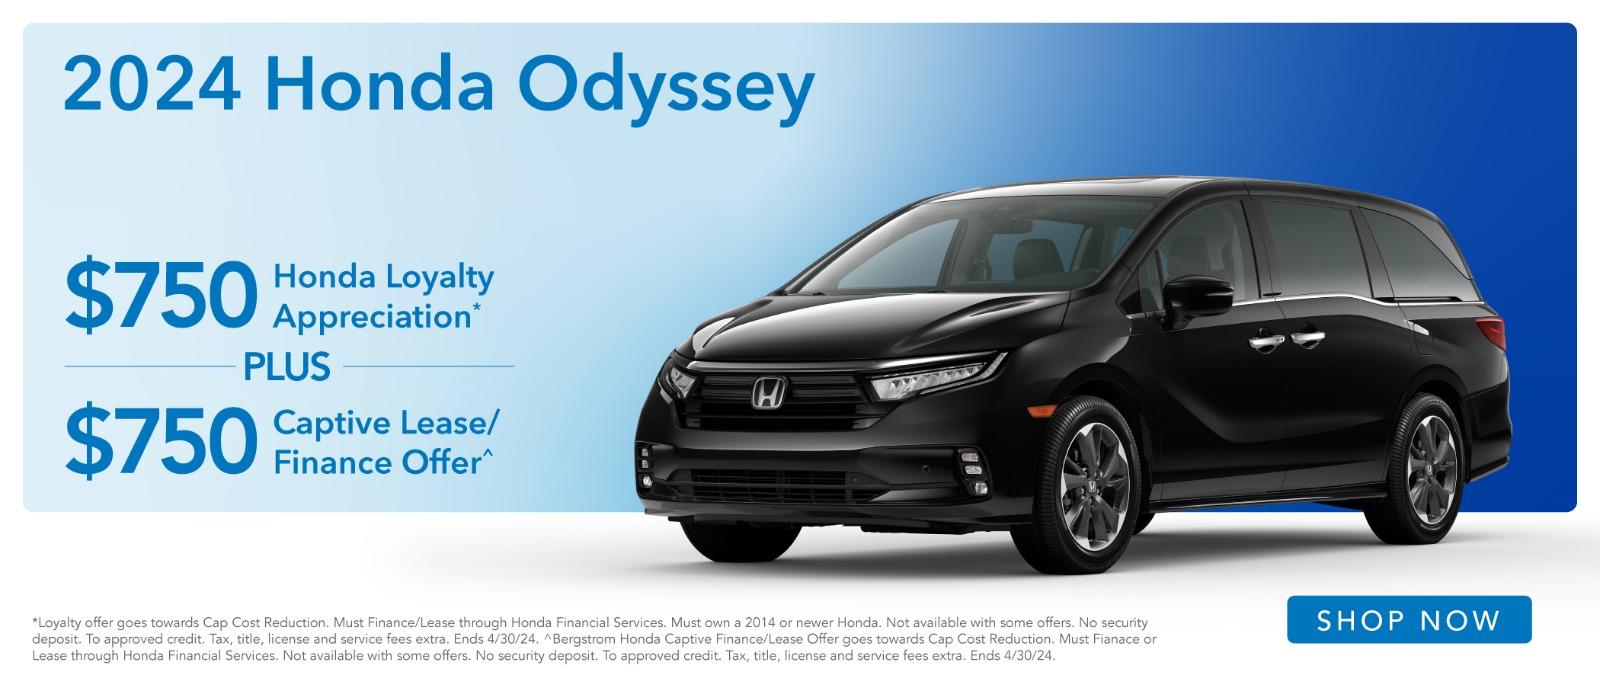 2024 Honda Odyssey $750 Honda Loyalty Appreciation